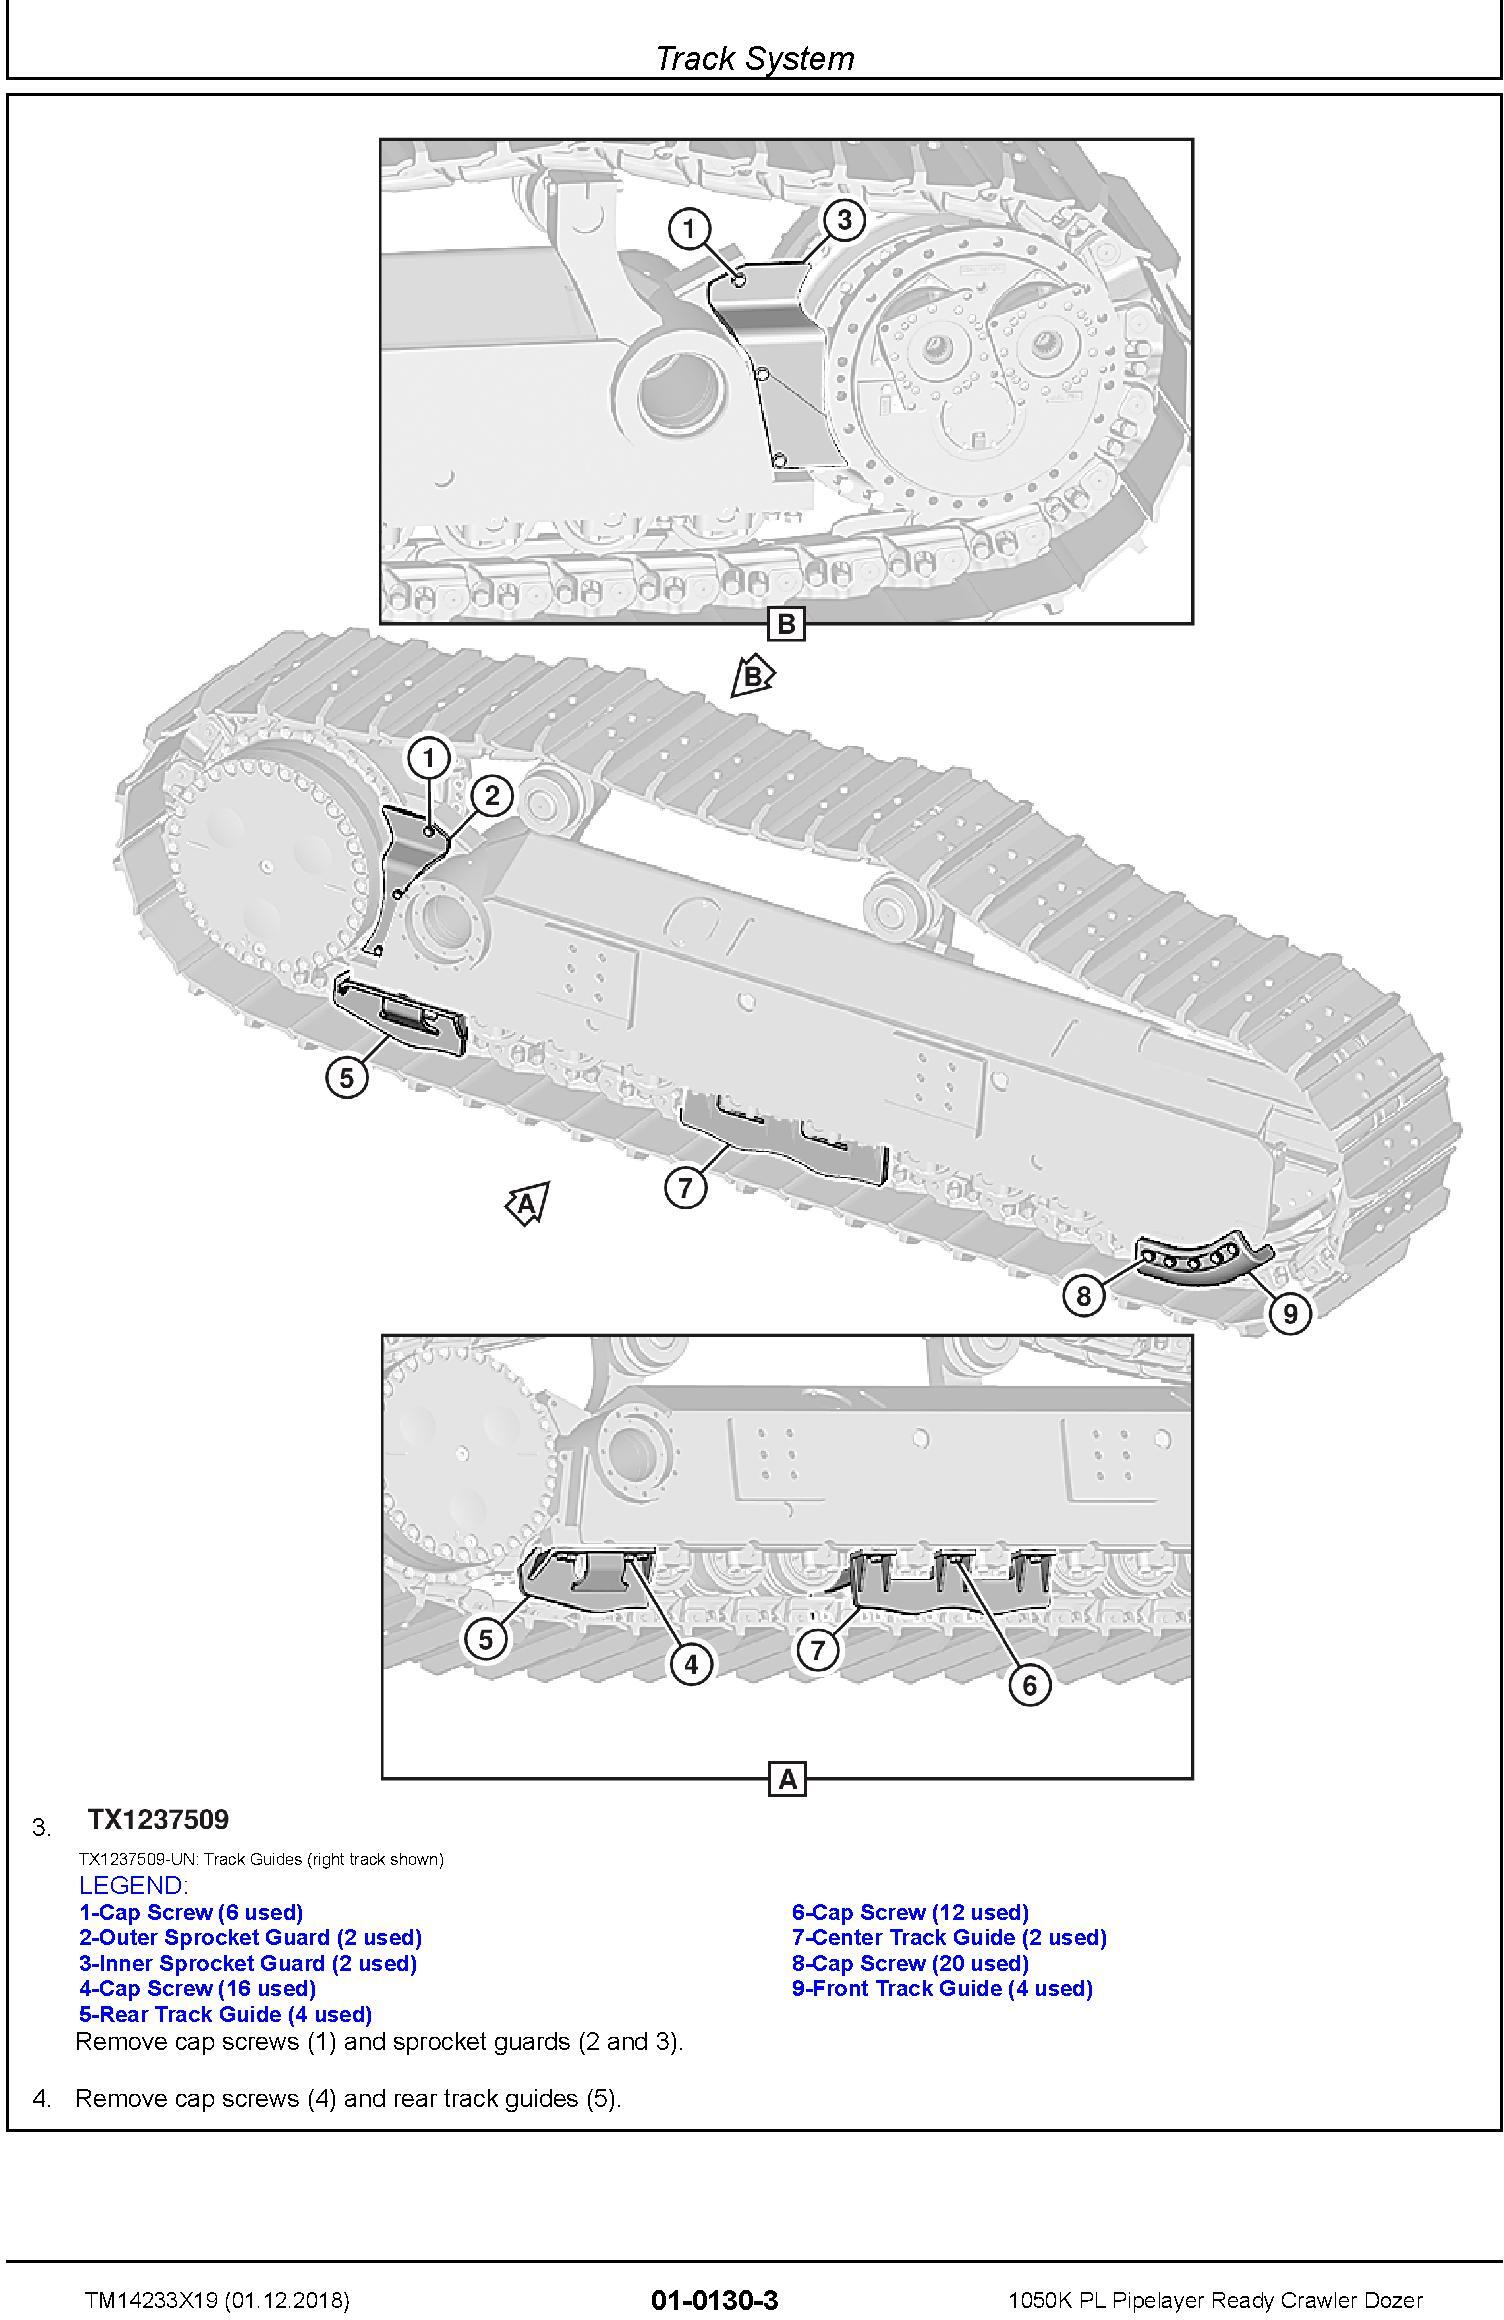 John Deere 1050K PL (SN. F310922-318801) Pipelayer Ready Crawler Dozer Repair Manual (TM14233X19) - 1